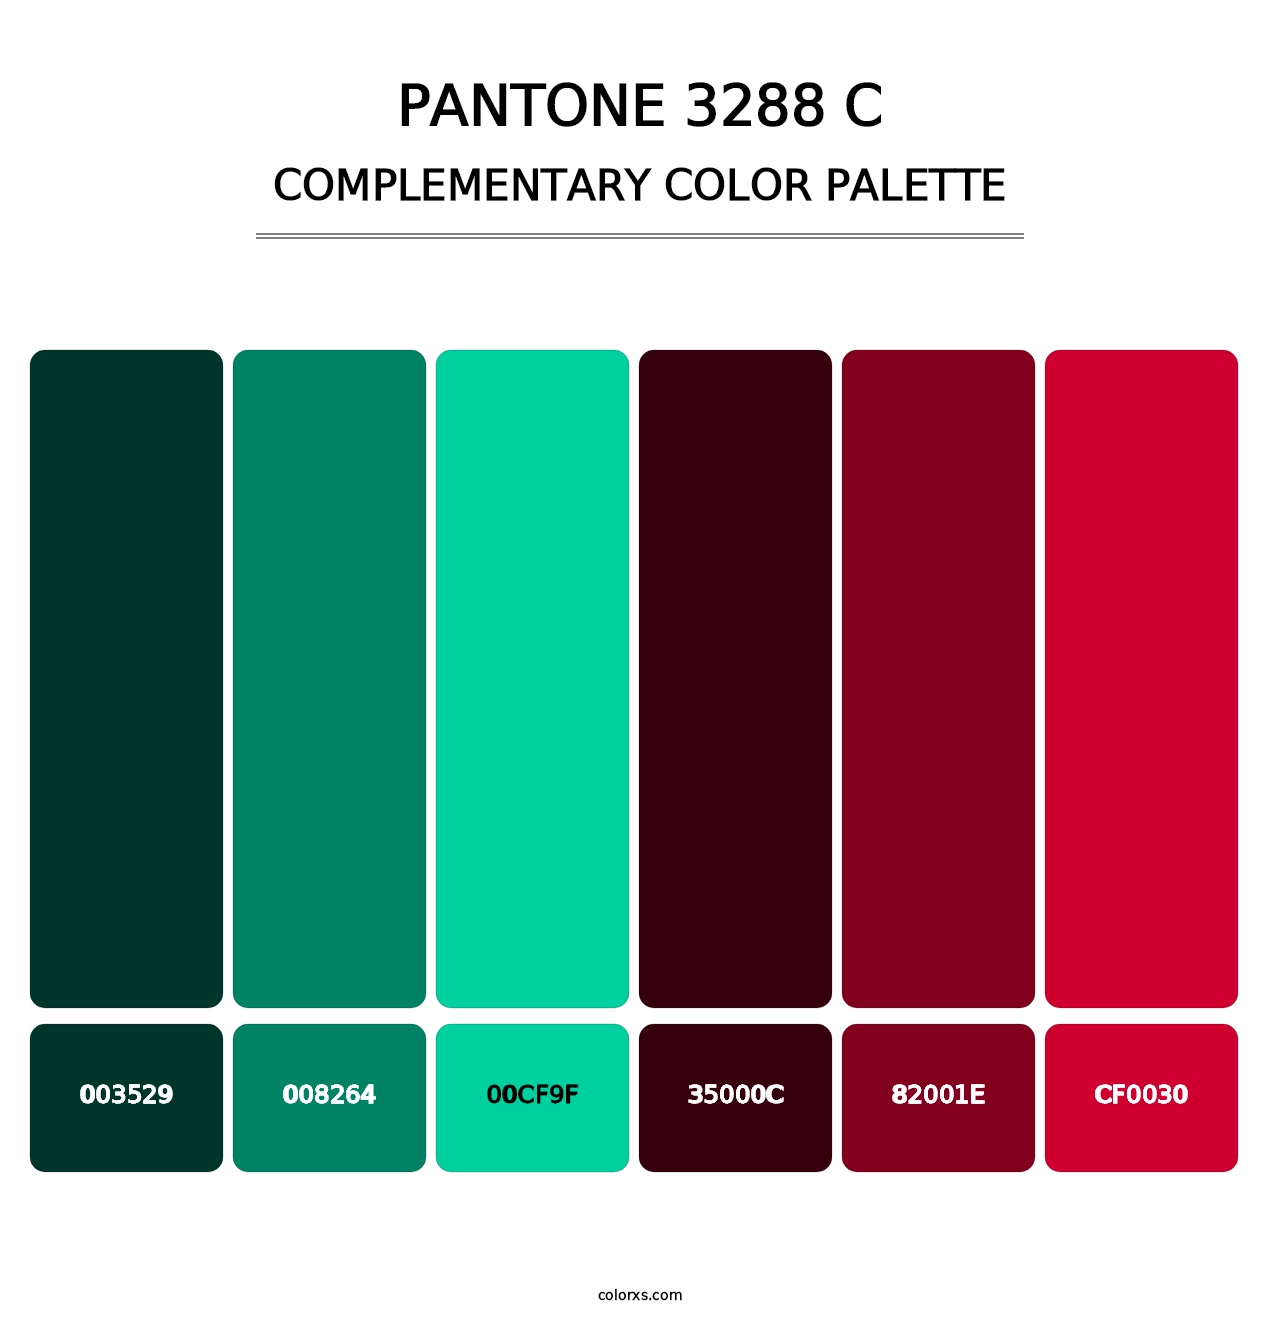 PANTONE 3288 C - Complementary Color Palette